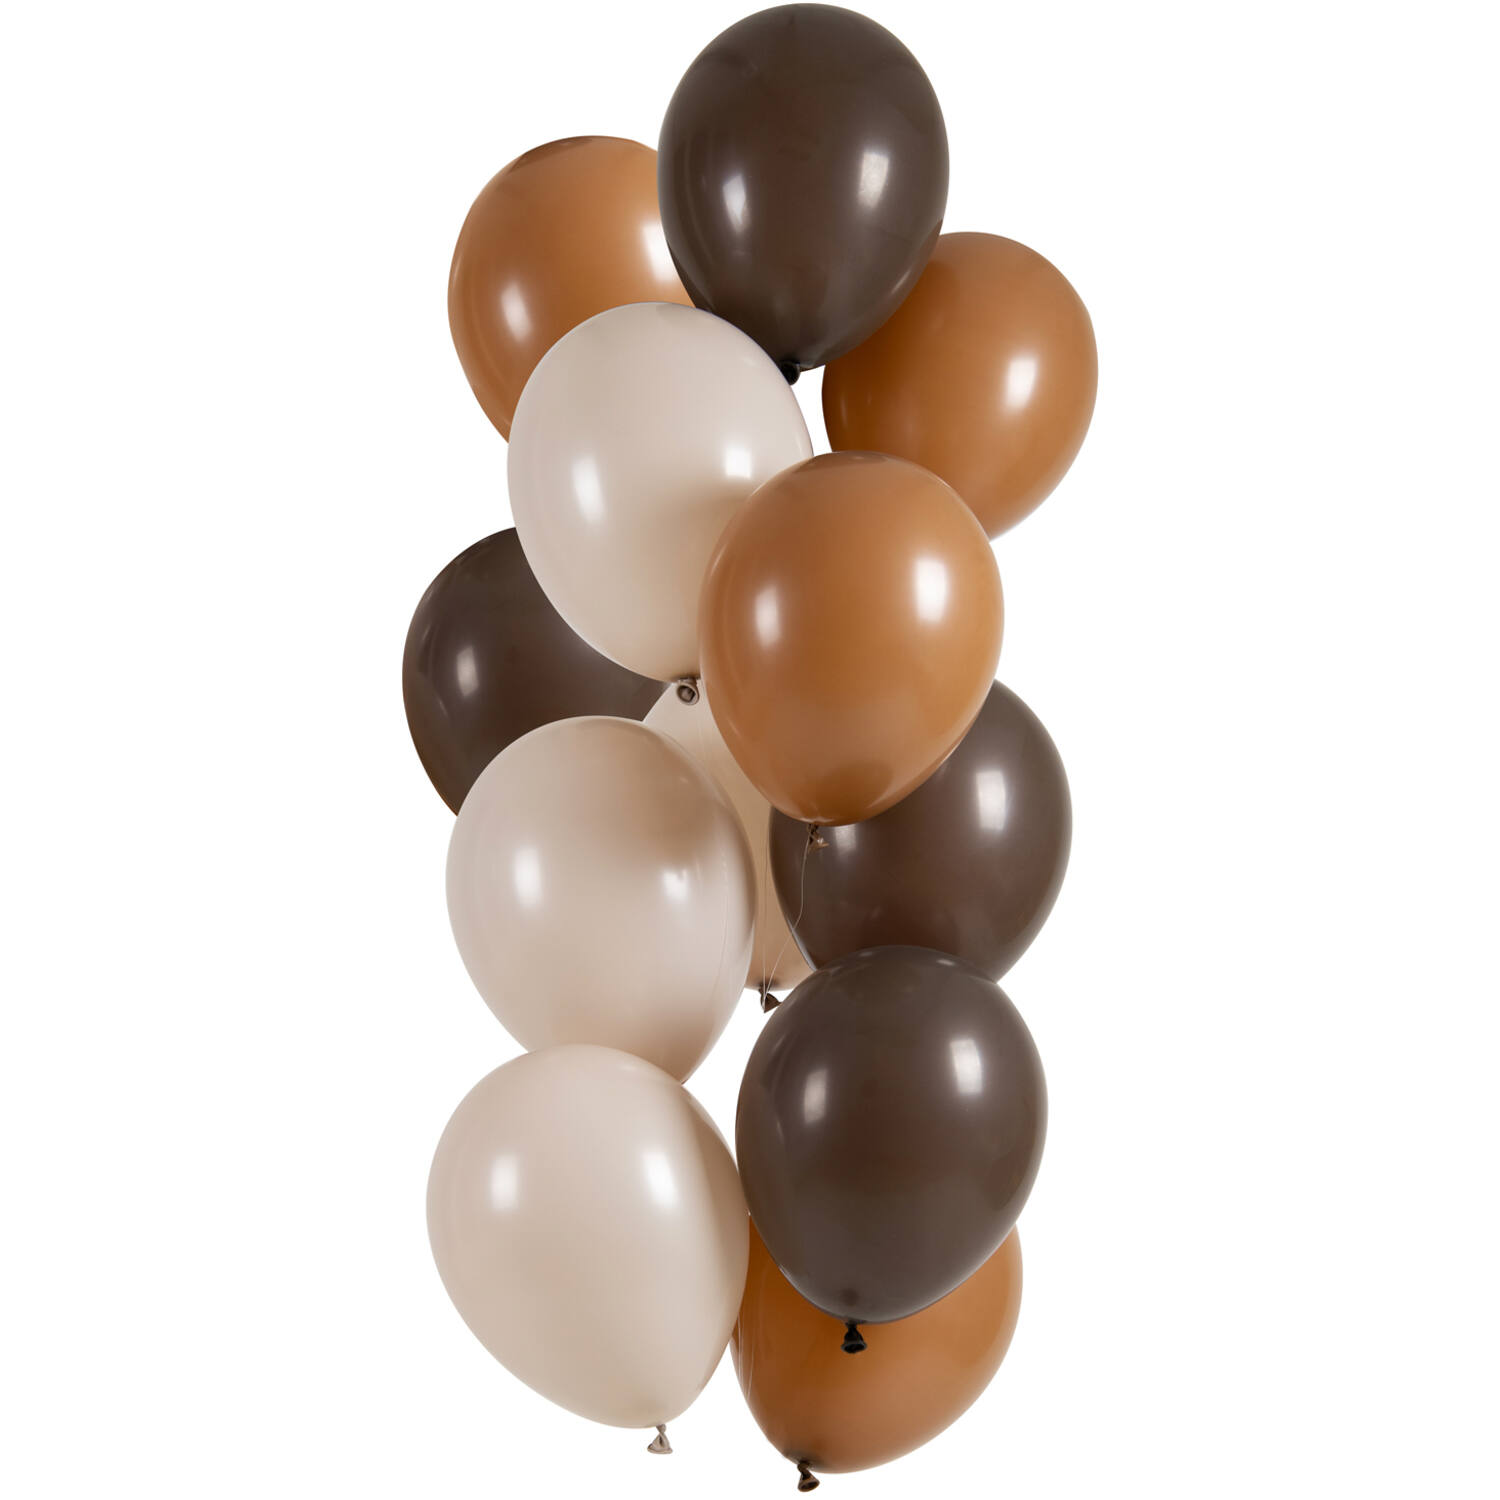 NEU Premium-Latex-Luftballons Mocha Chocolate, 33cm, 12 Stk.